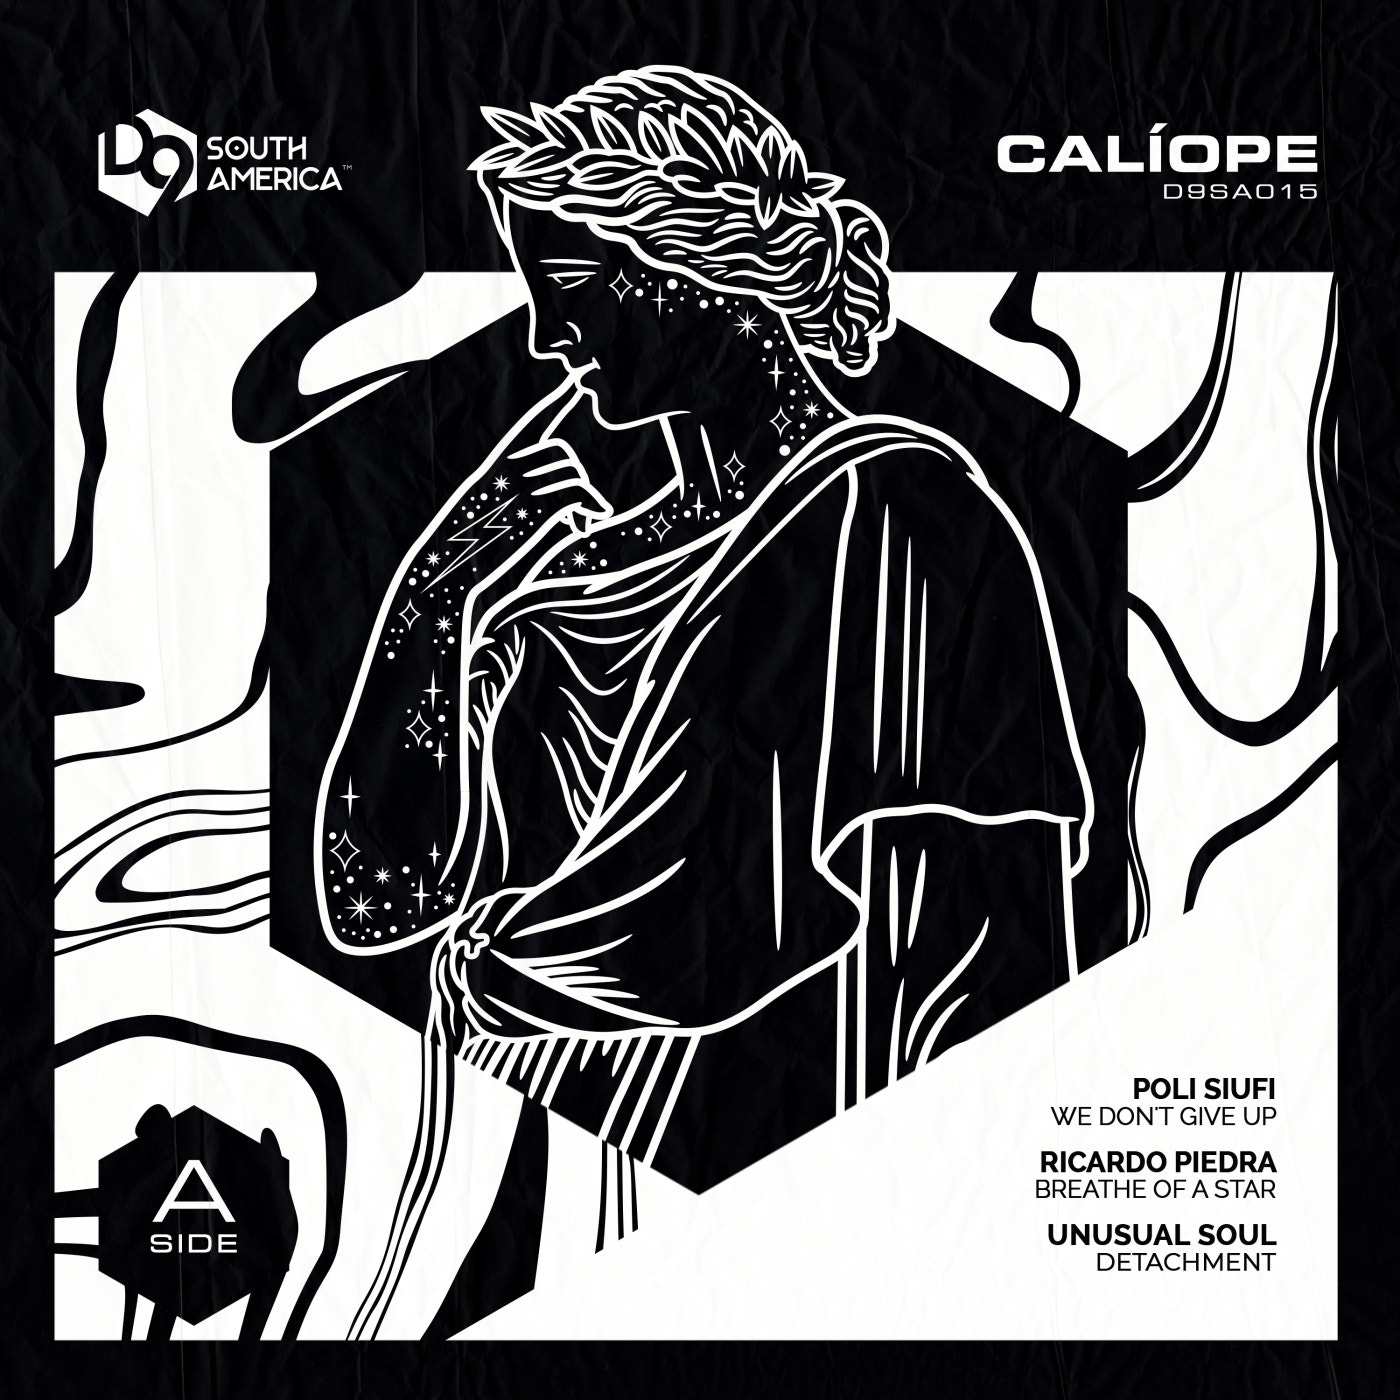 Download Poli Siufi, Ricardo Piedra, Unusual Soul - Caliope A Side on Electrobuzz